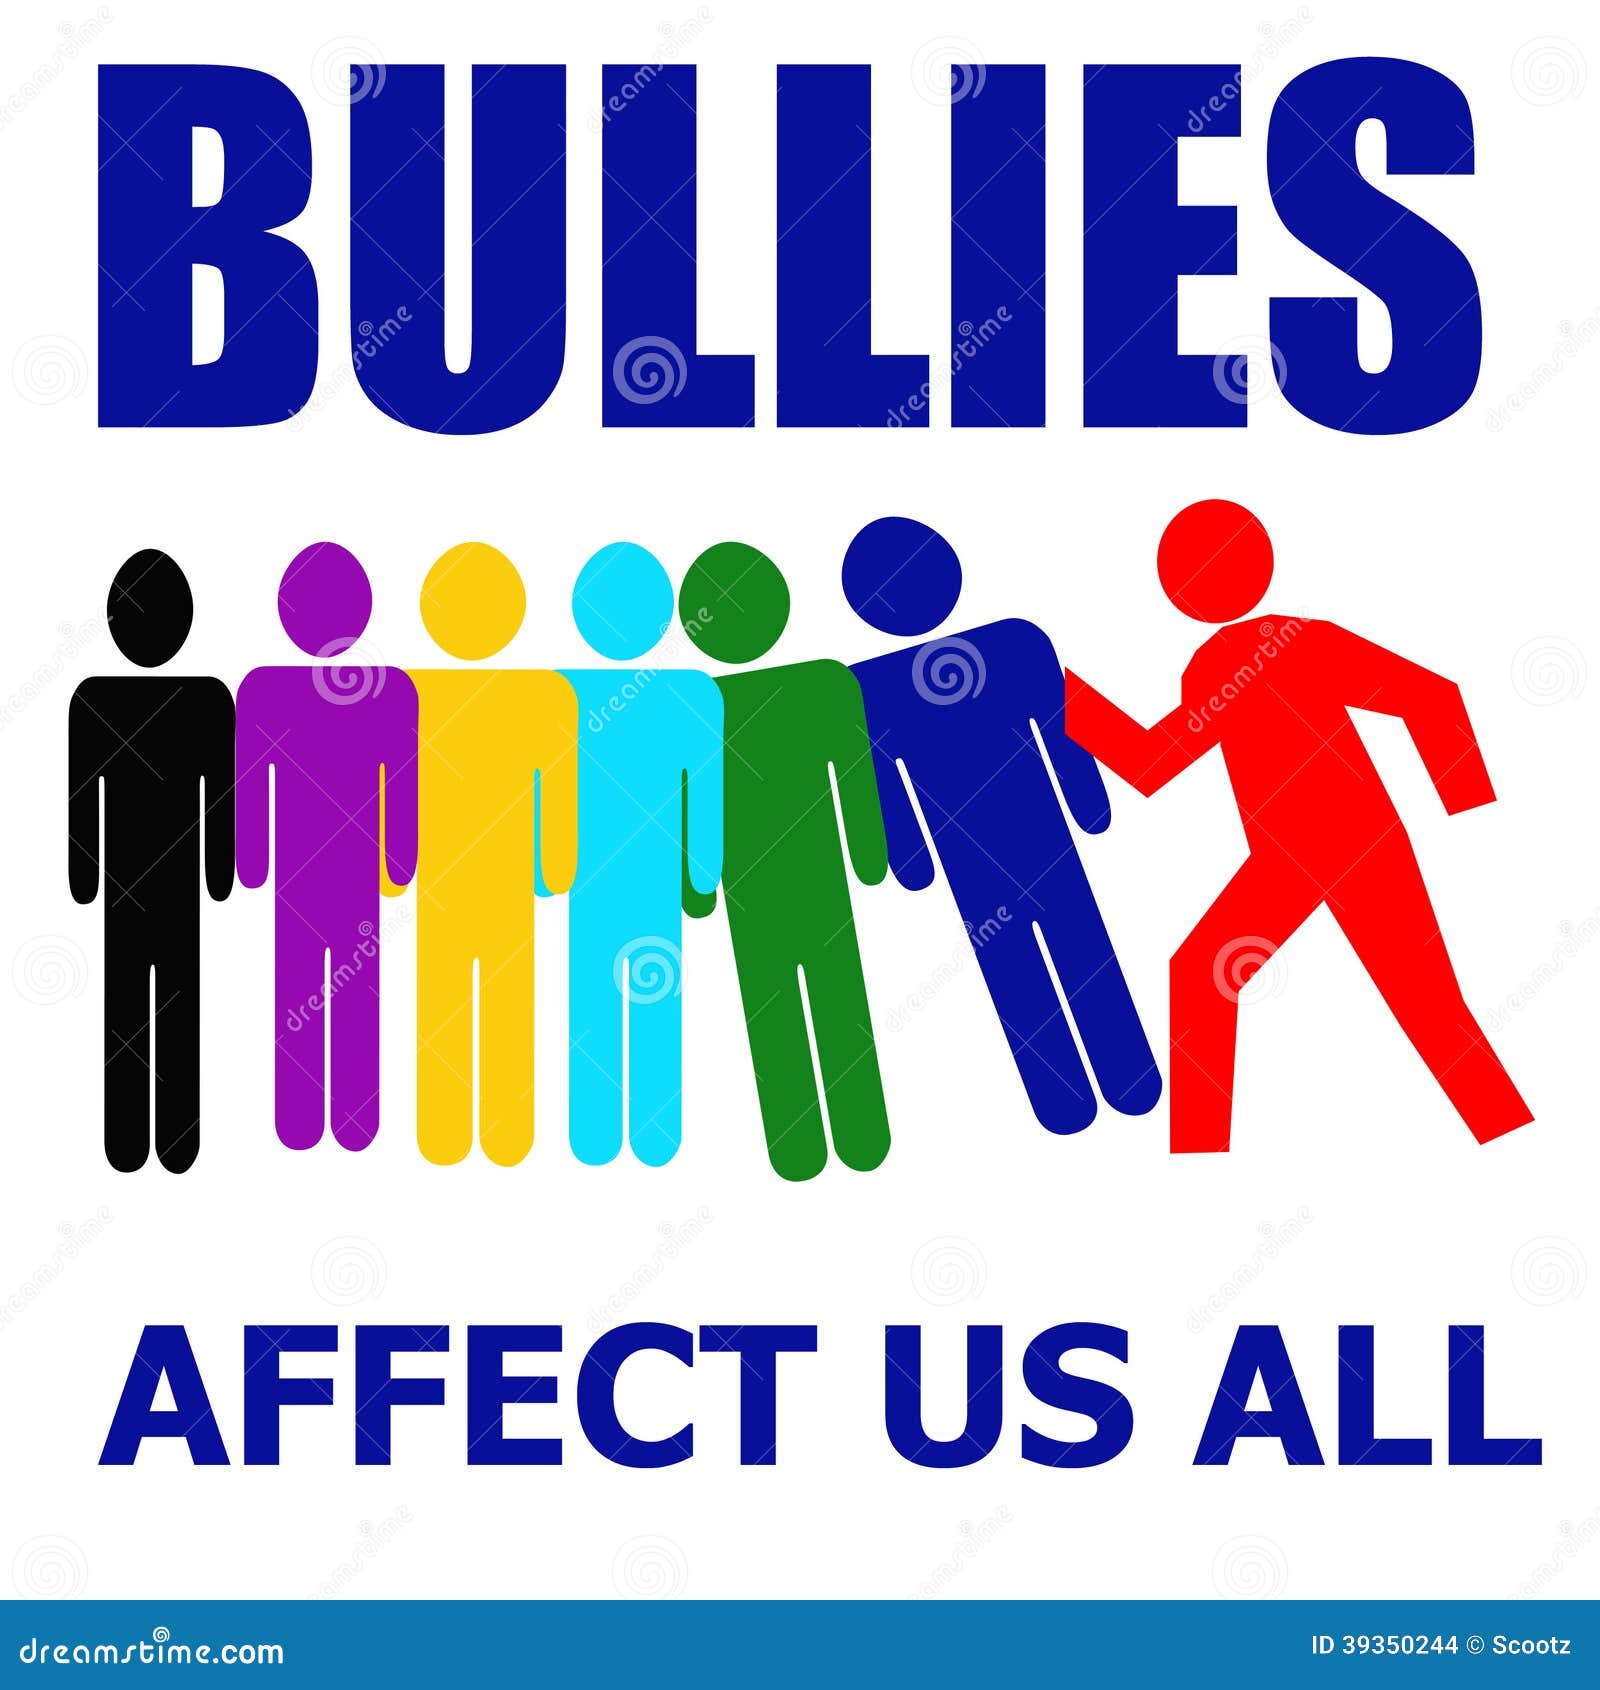 bullies affect us all